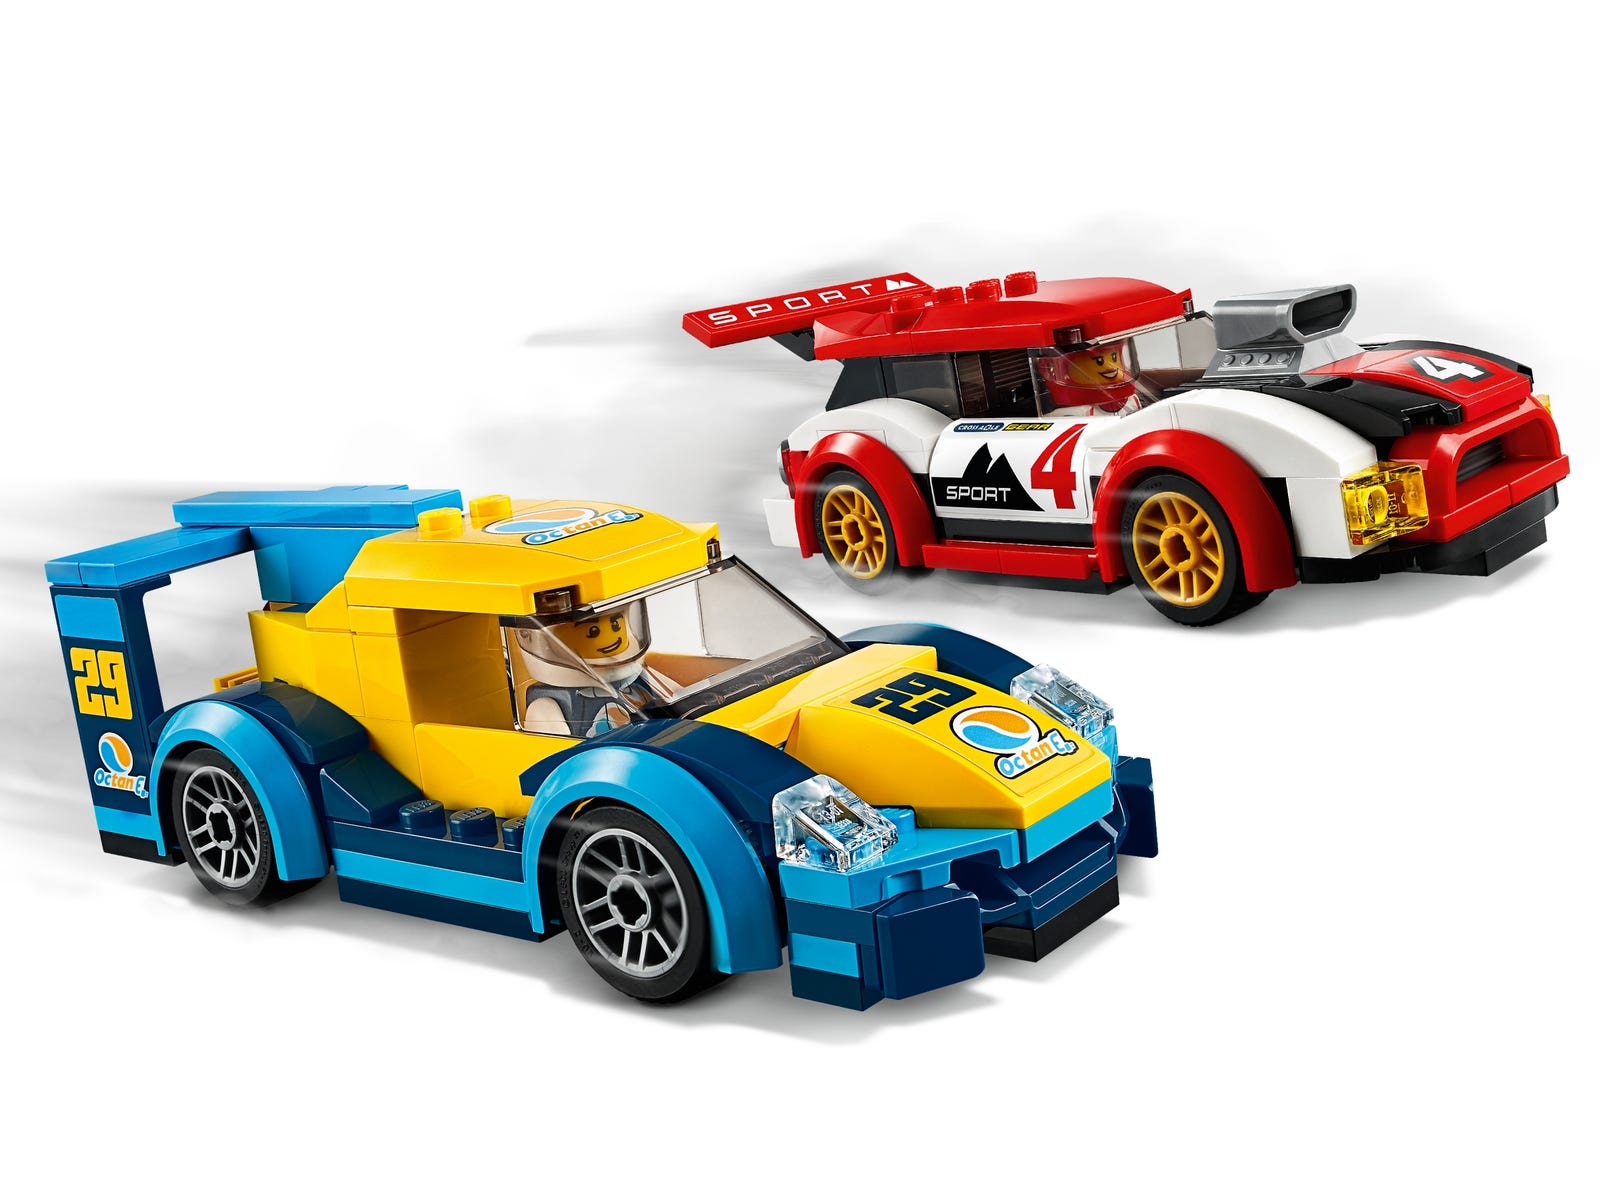 Lego City Racing Cars 60256